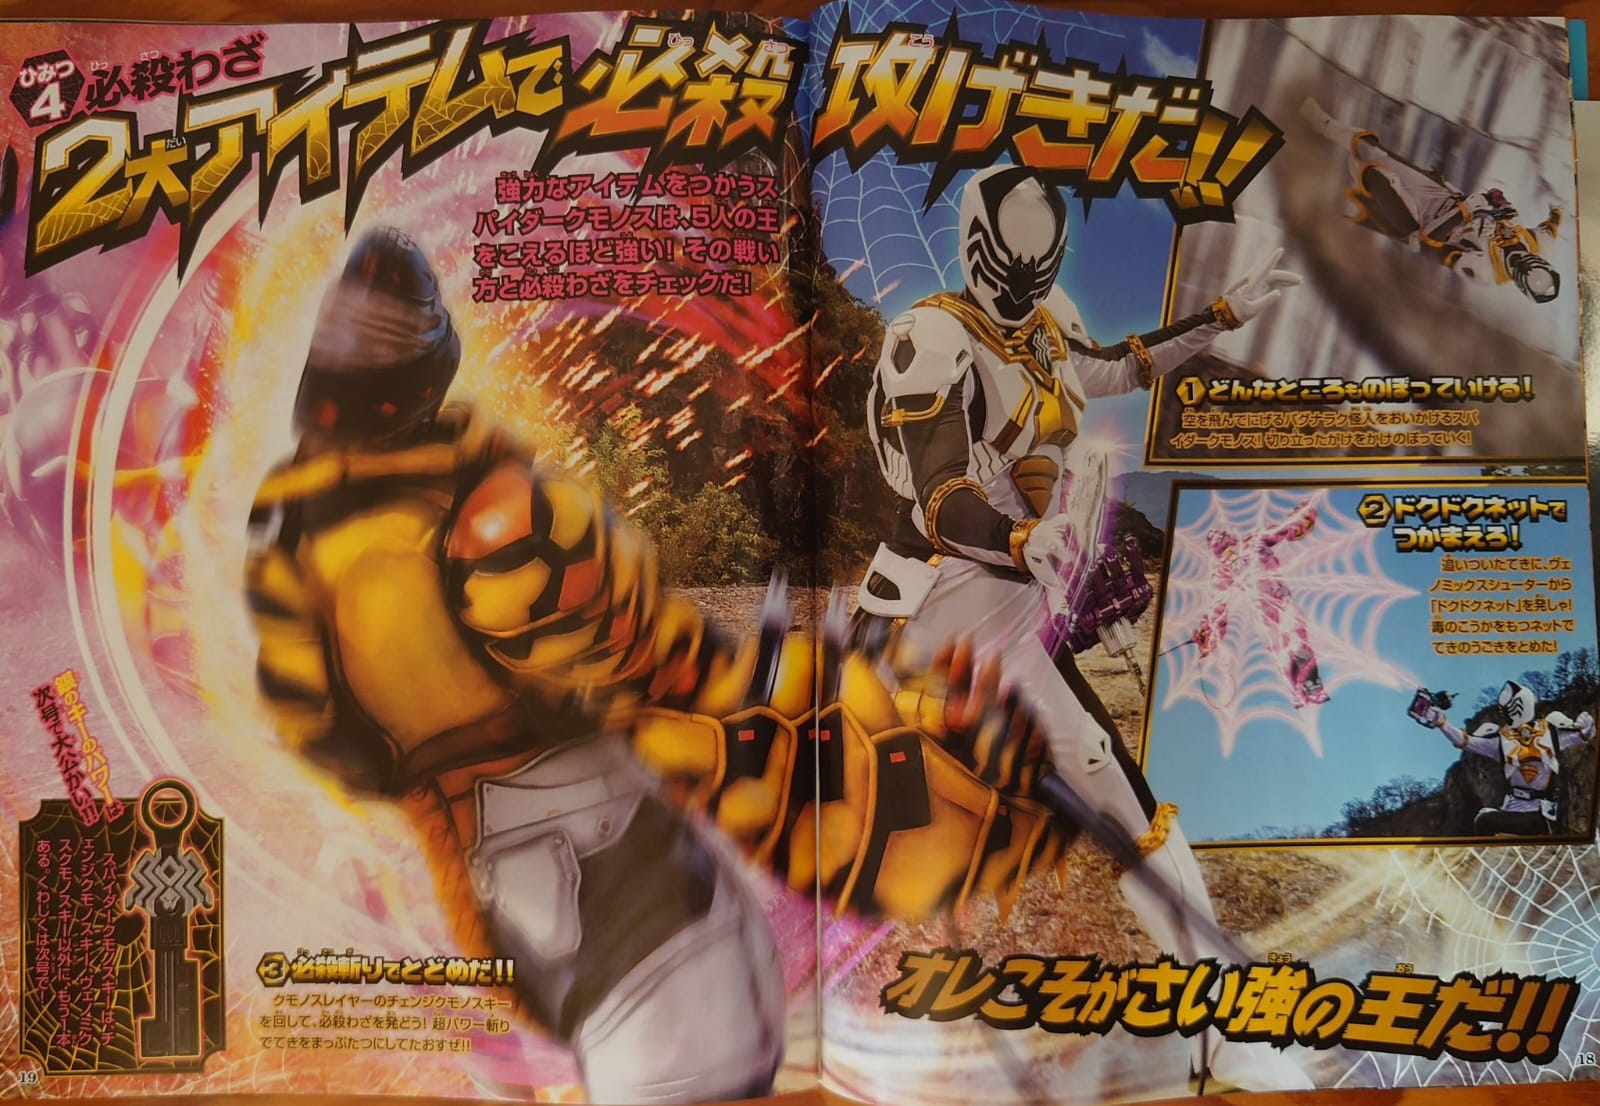 Ohsama Sentai King-Ohger 6th Ranger- Spider Kumonos- Fully Revealed